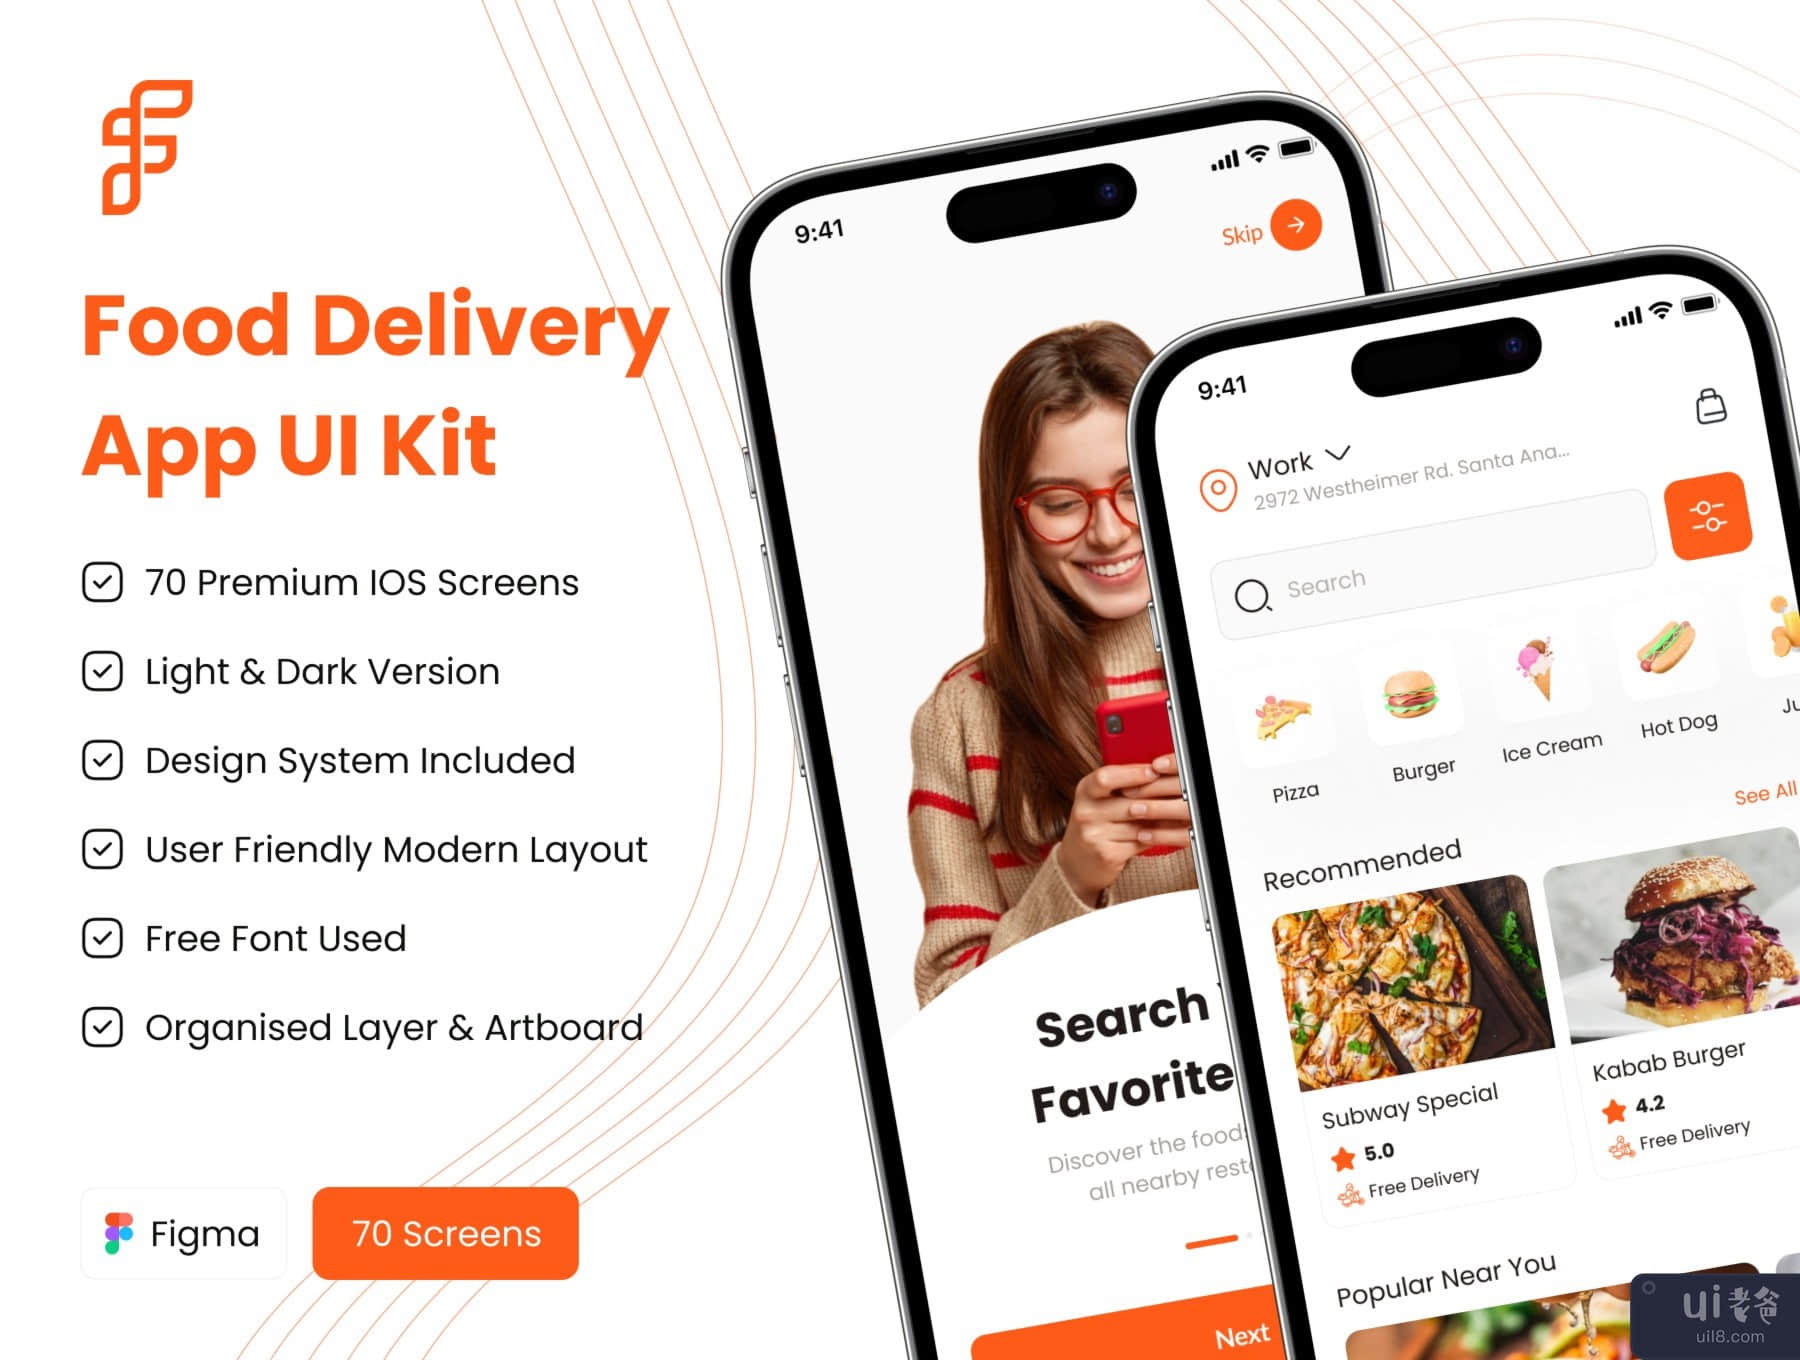 食品配送应用程序 UI 工具包 (Food Delivery App UI Kit)插图1